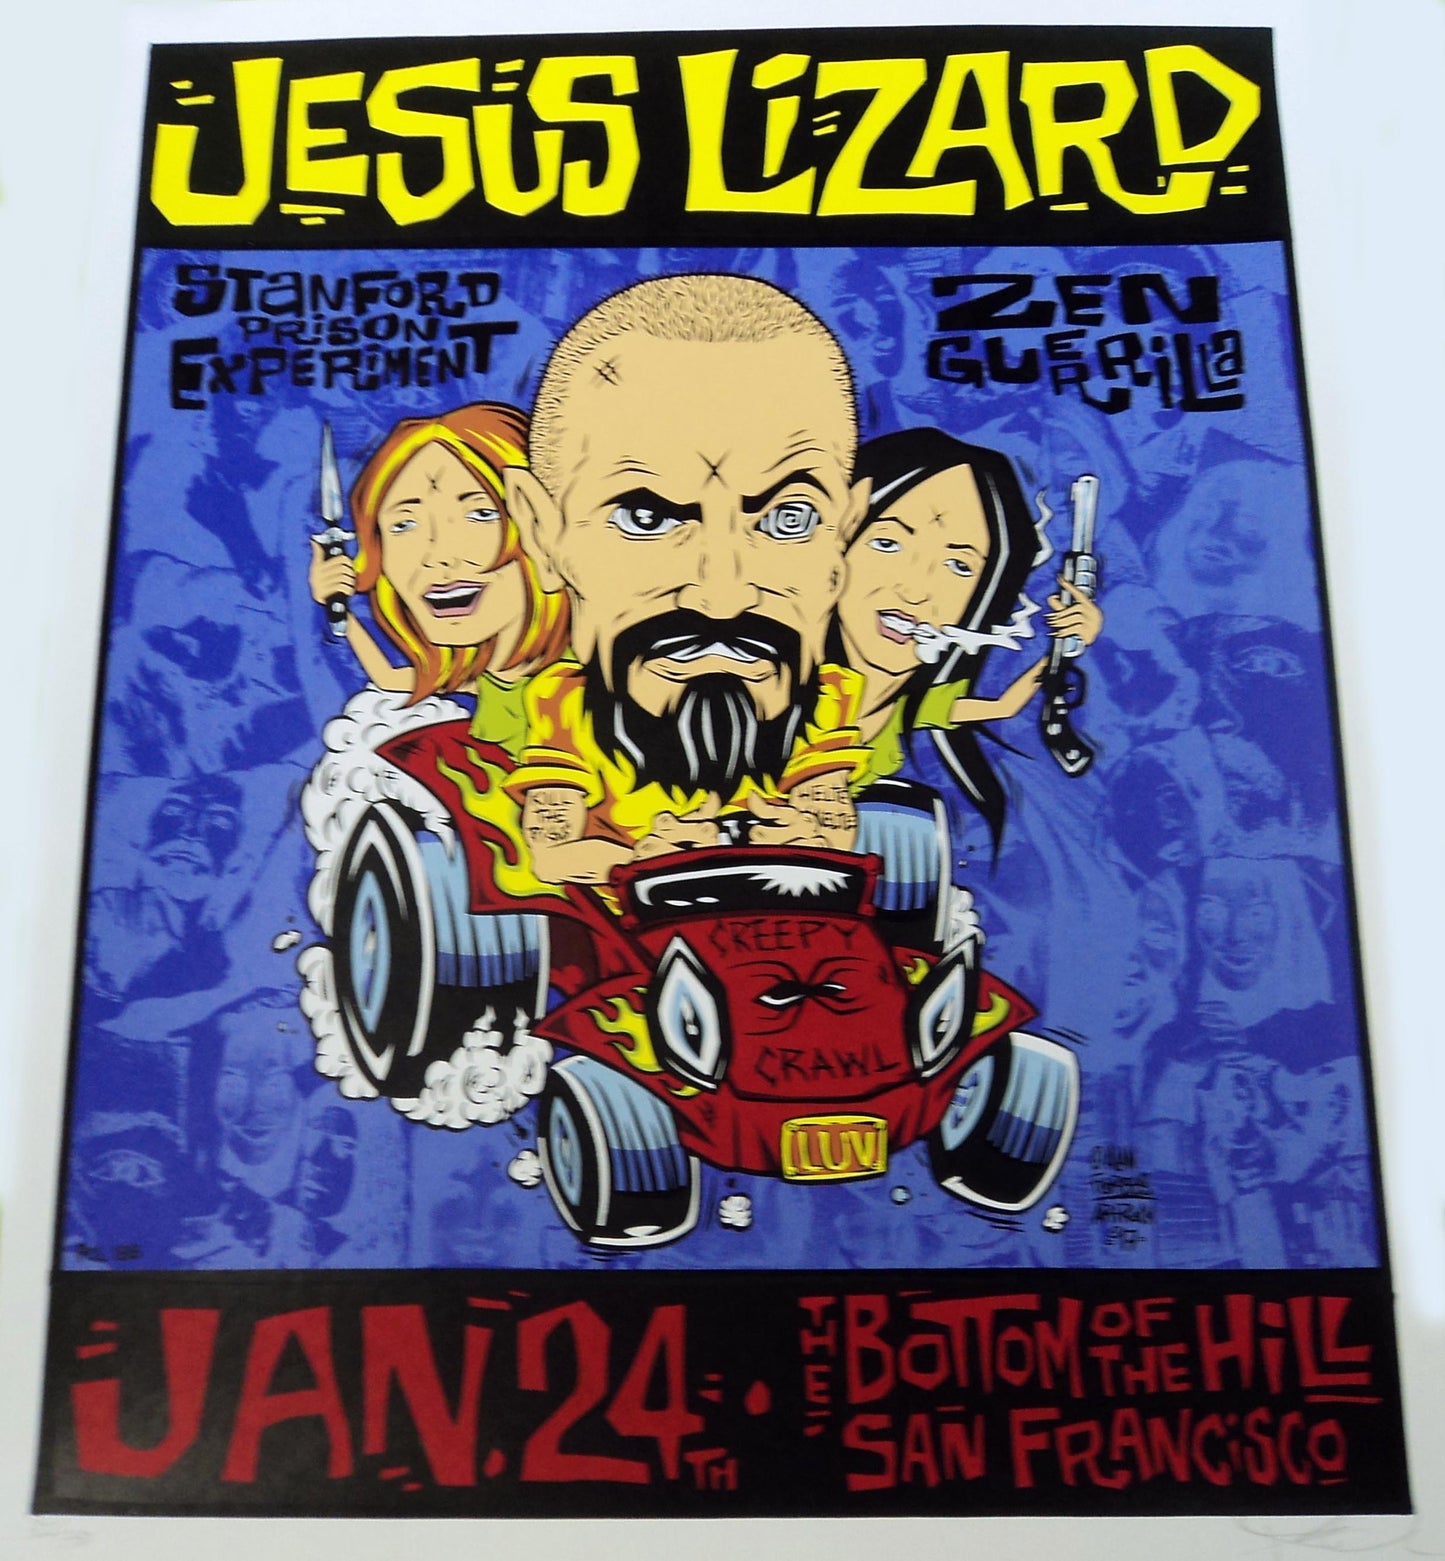 Alan Forbes - 1997 - Jesus Lizard Concert Poster